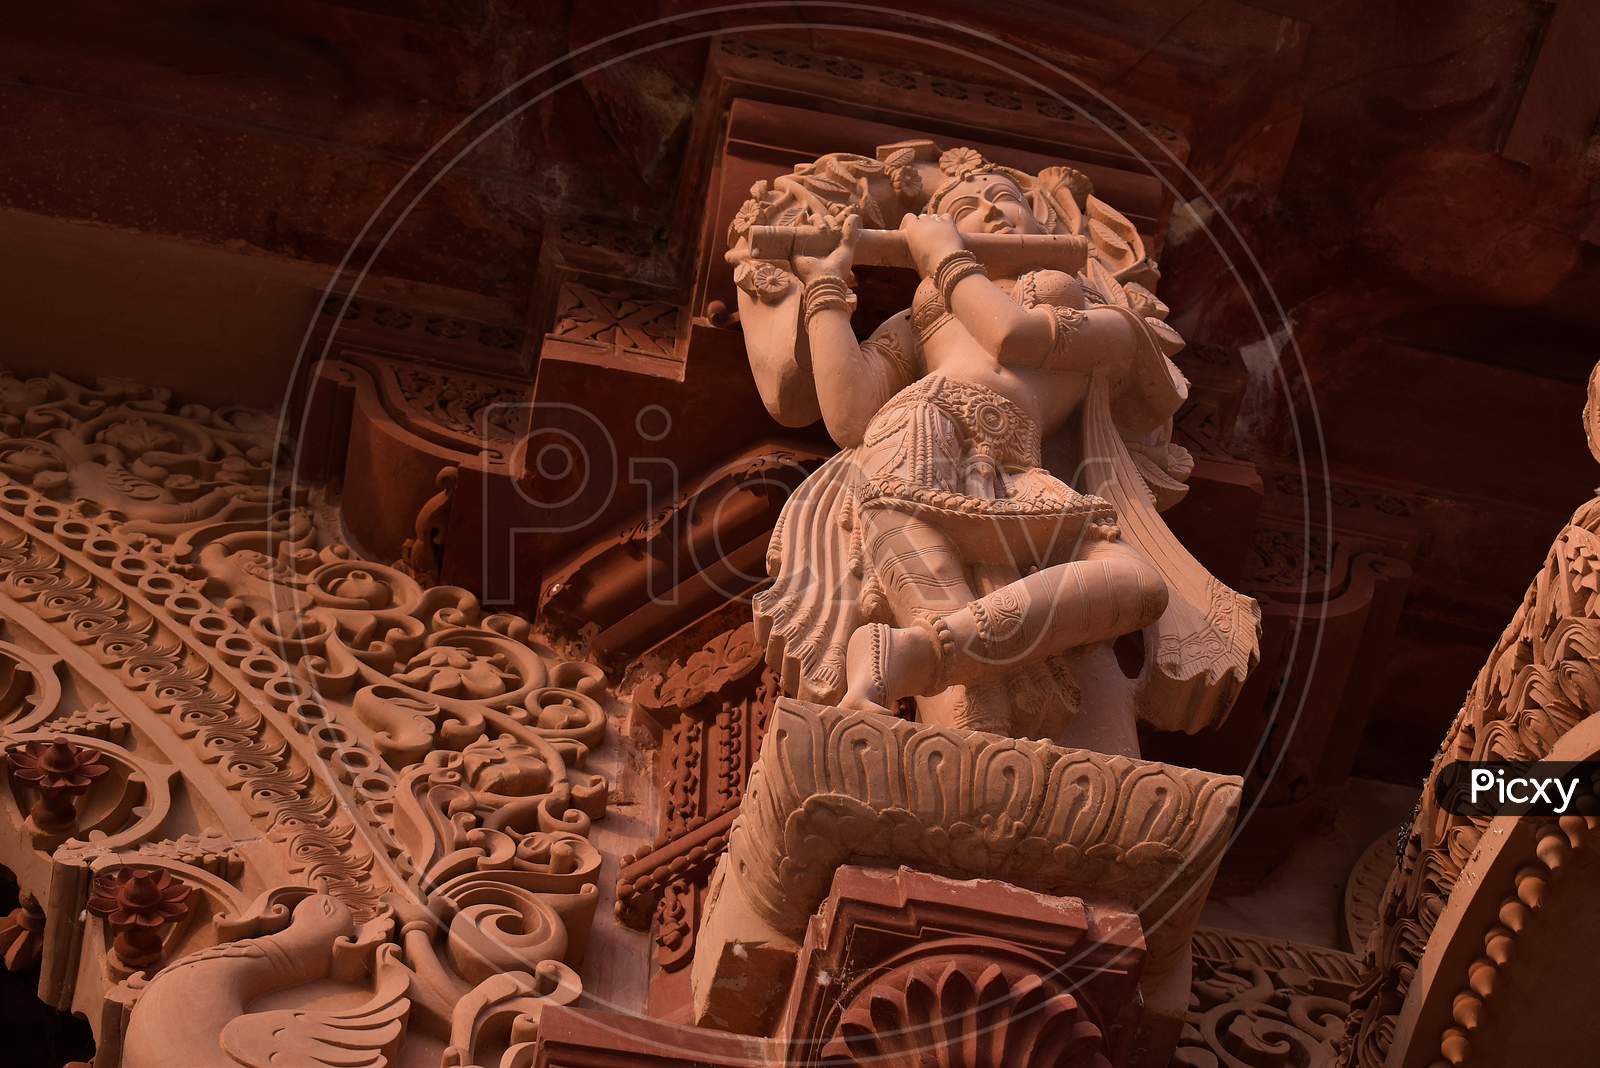 Indian sculpture